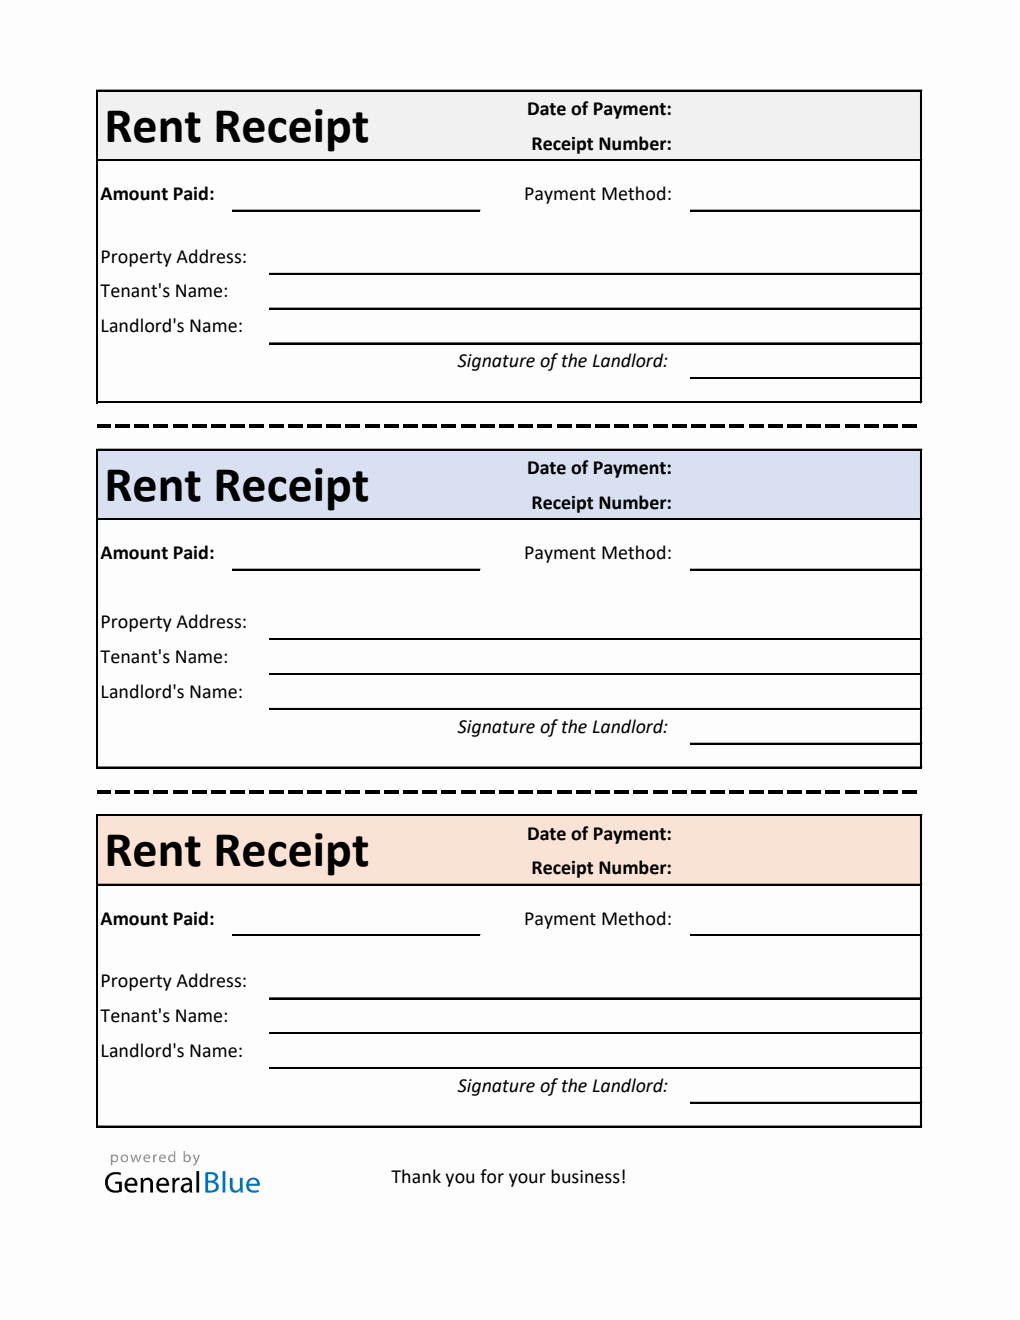 Simple Rent Receipt Template in Excel